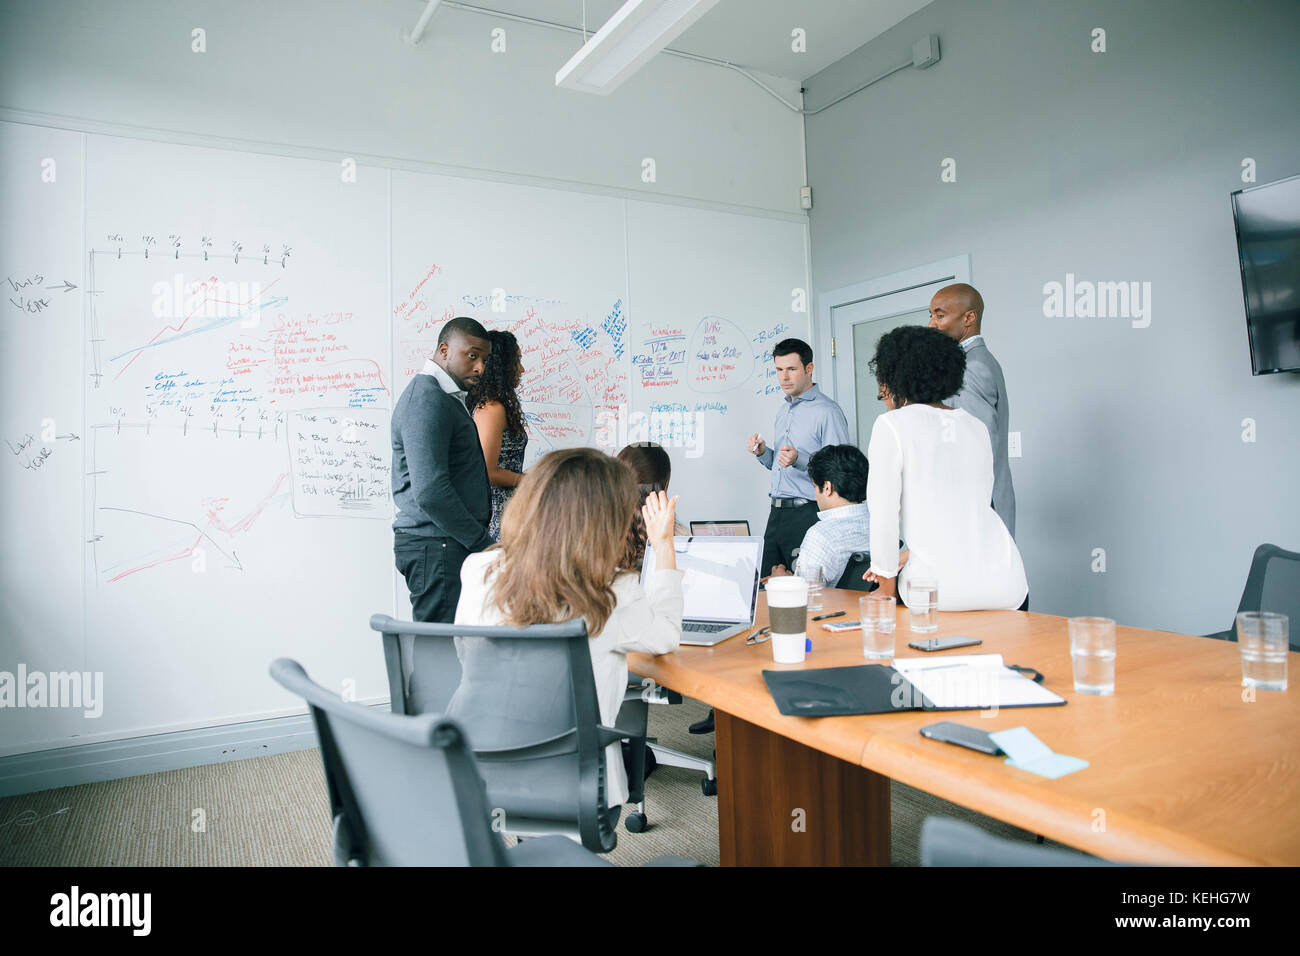 Businessman talking near whiteboard in meeting Stock Photo